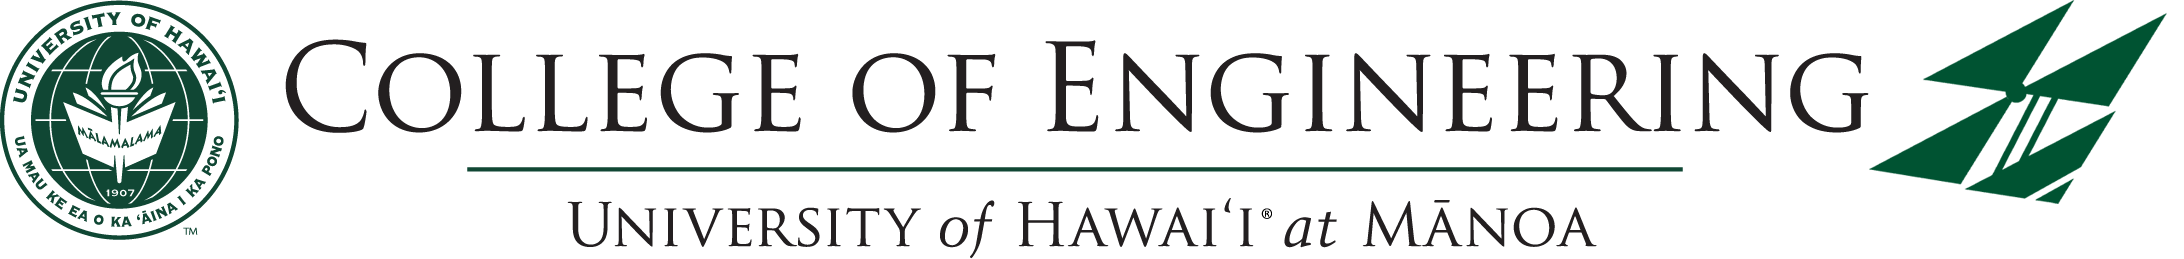 University of Hawai'i College of Engineering